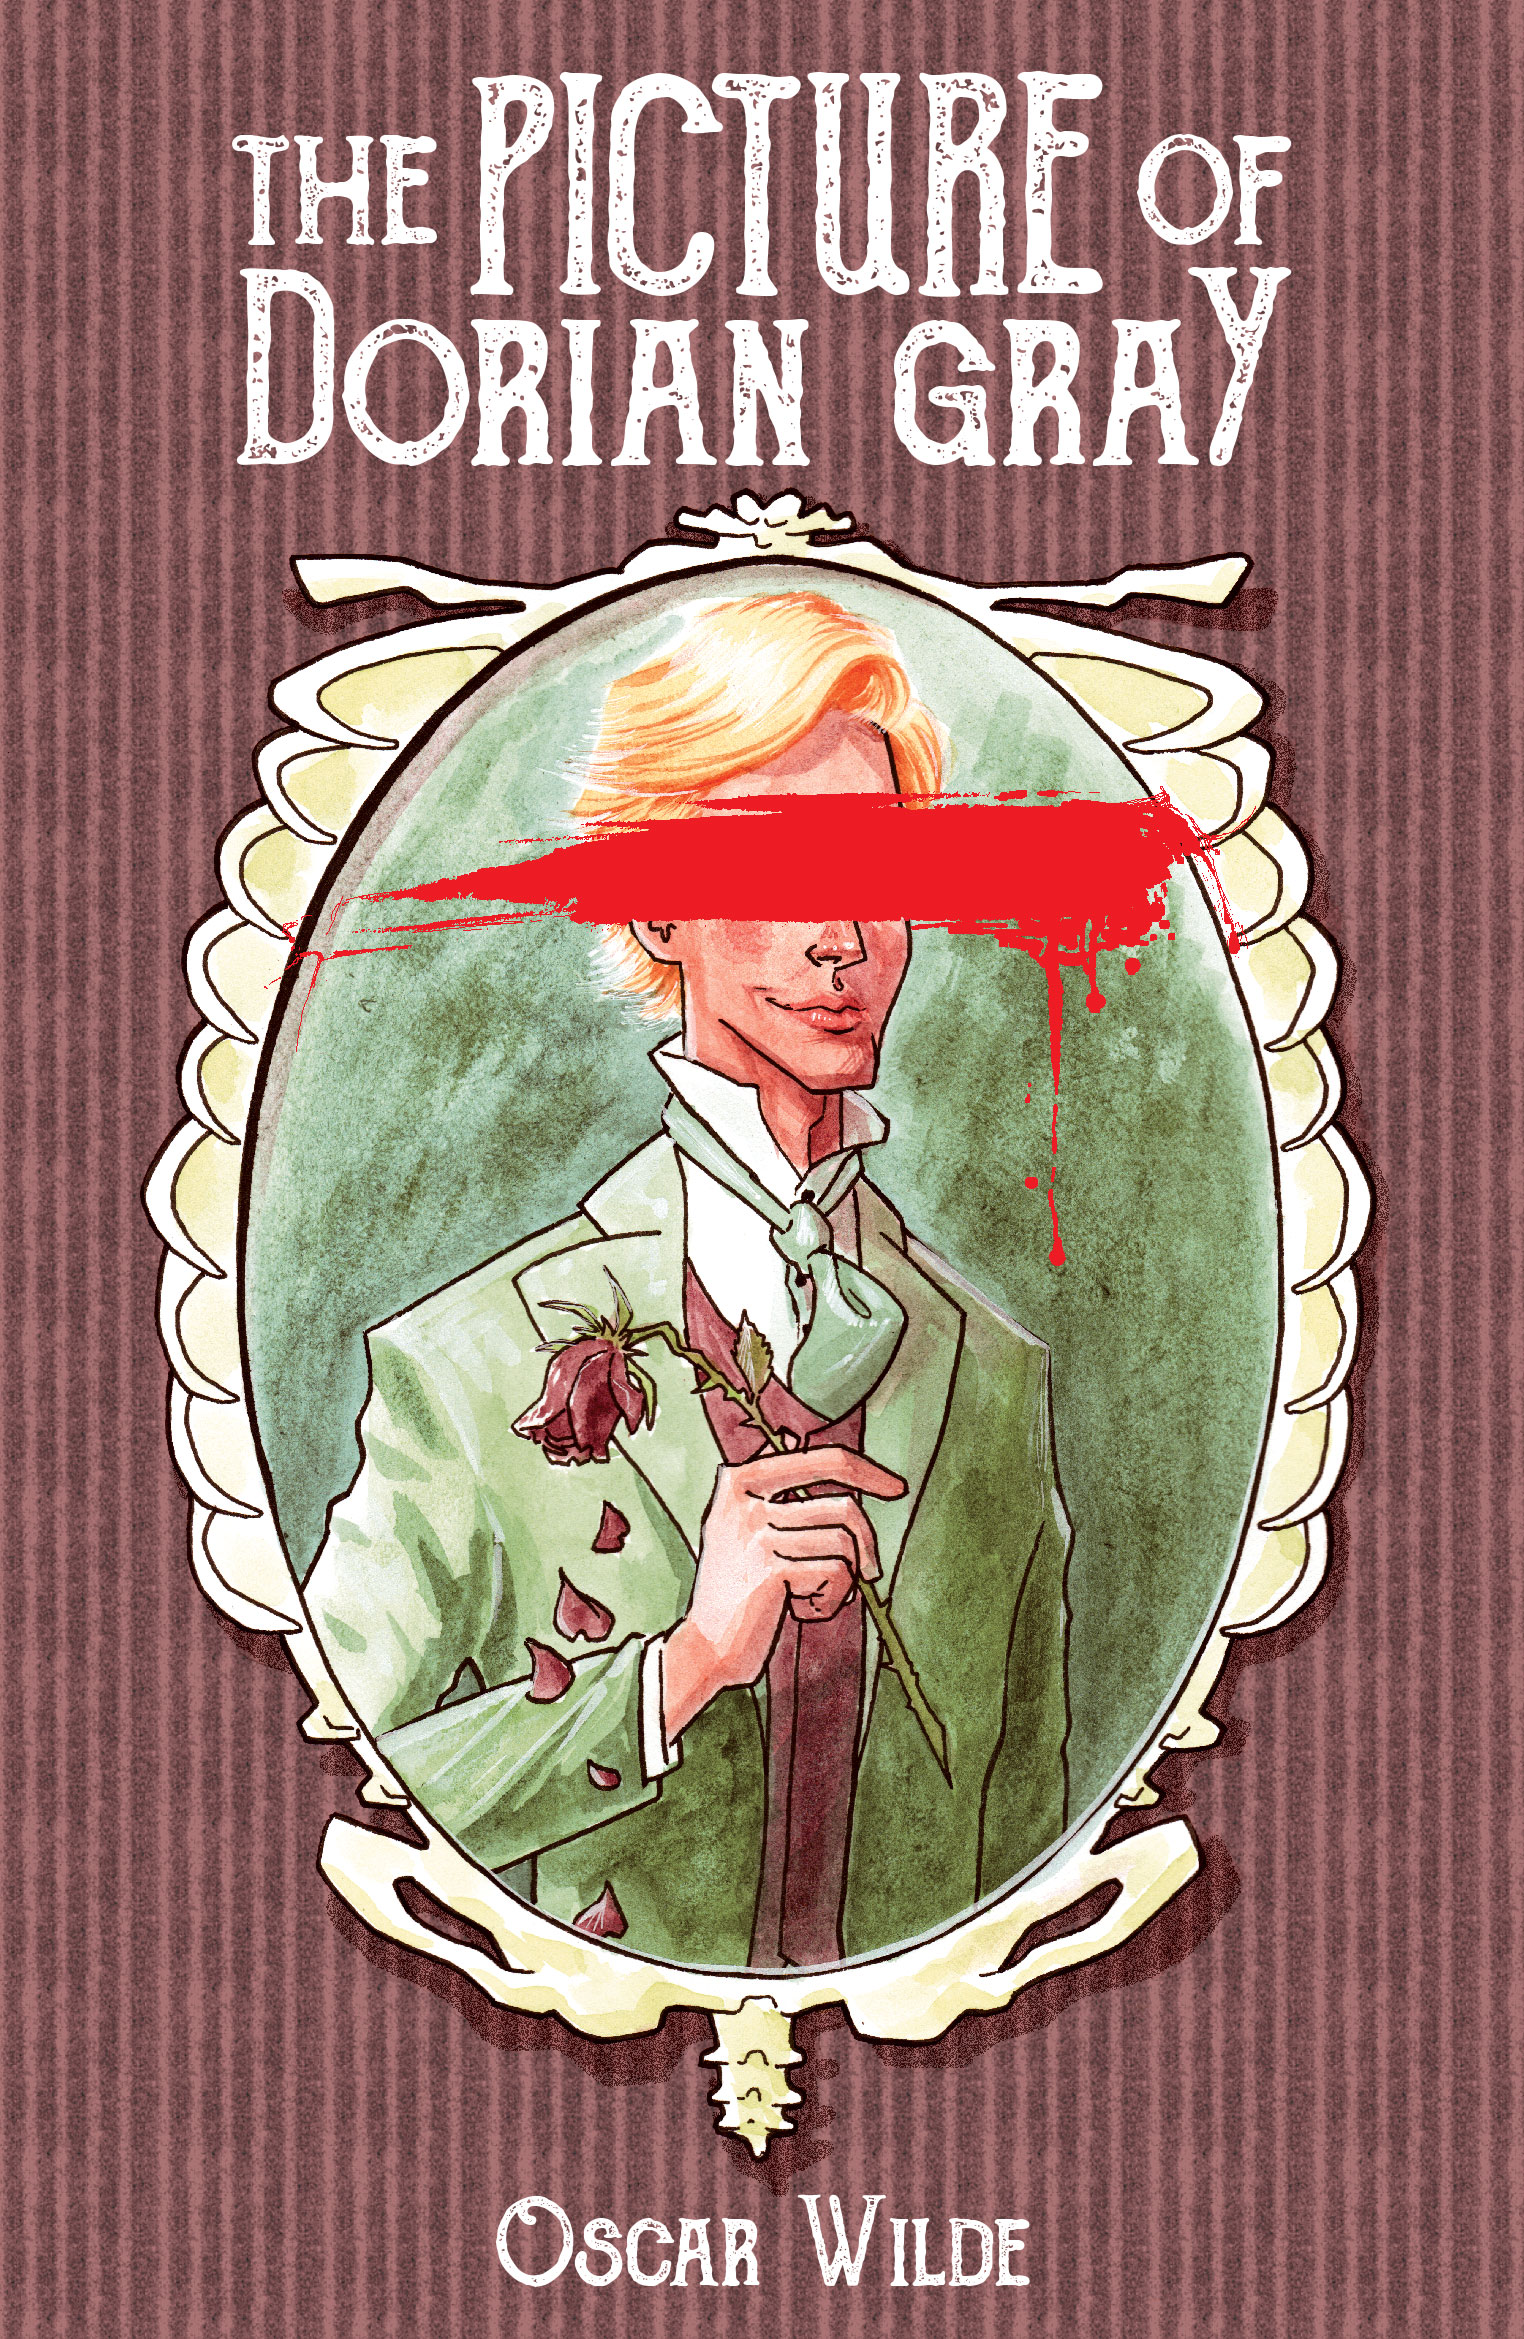 DorianGray-Book-Cover.jpg